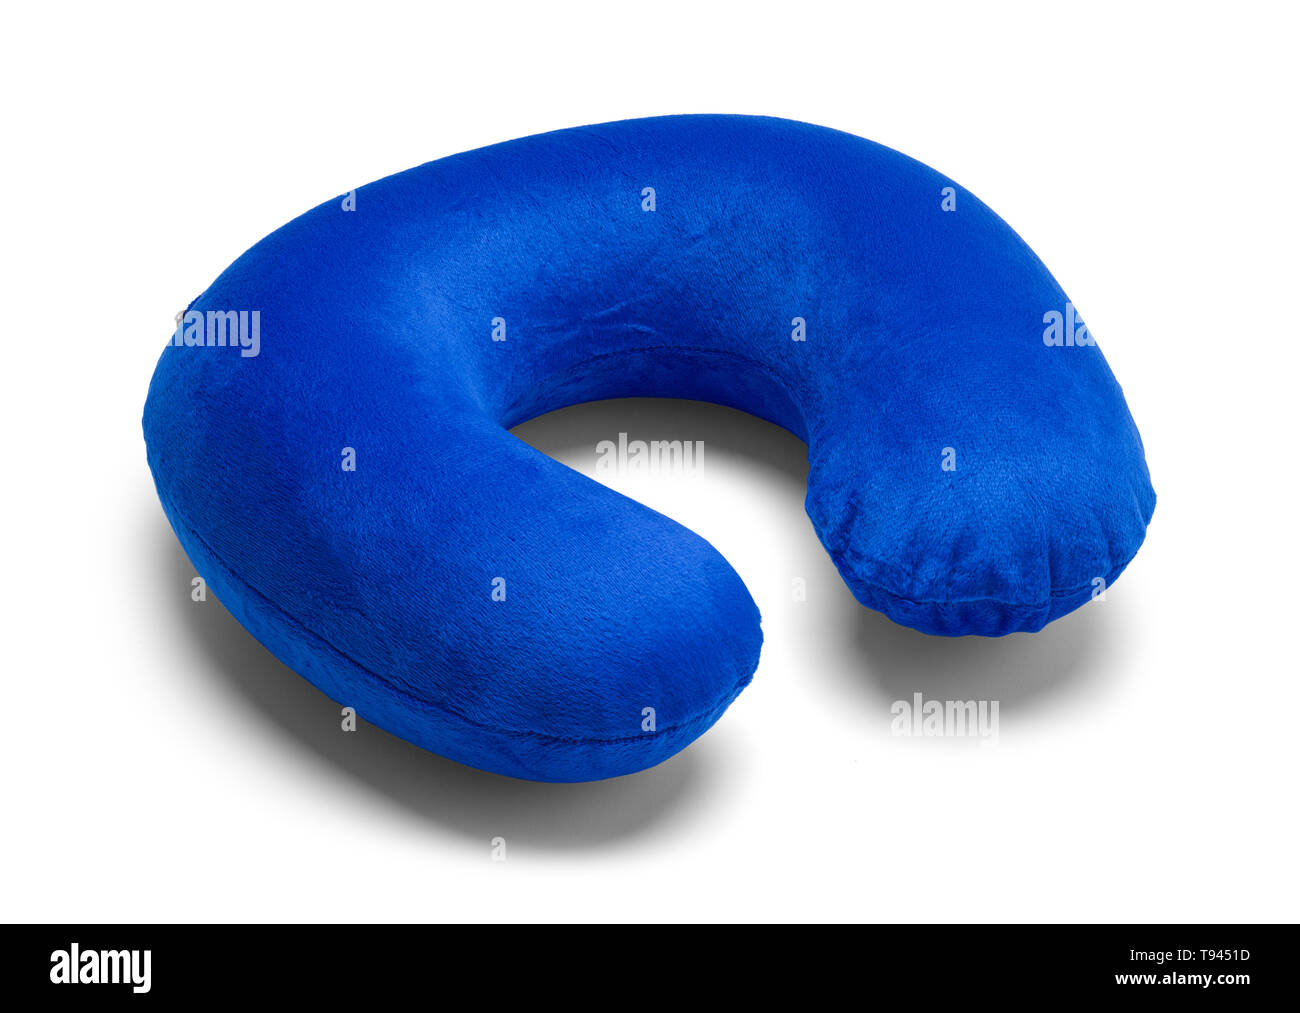 Blue Travel Neck Pillow Isolated on White Background. Stock Photo